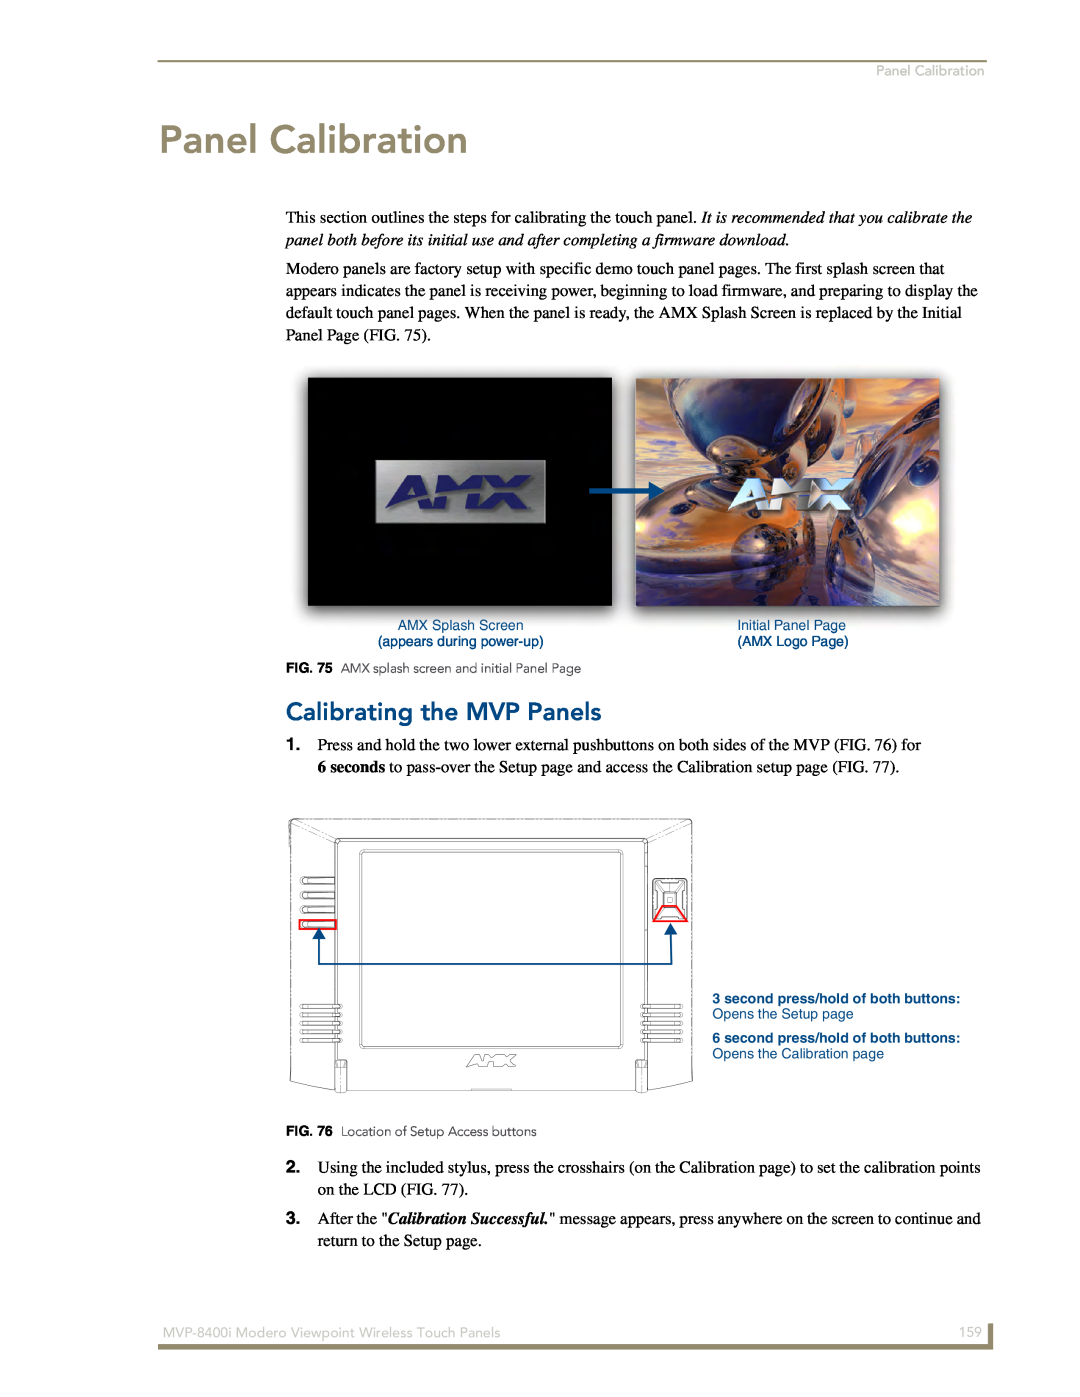 AMX MVP-8400i manual Panel Calibration, Calibrating the MVP Panels 